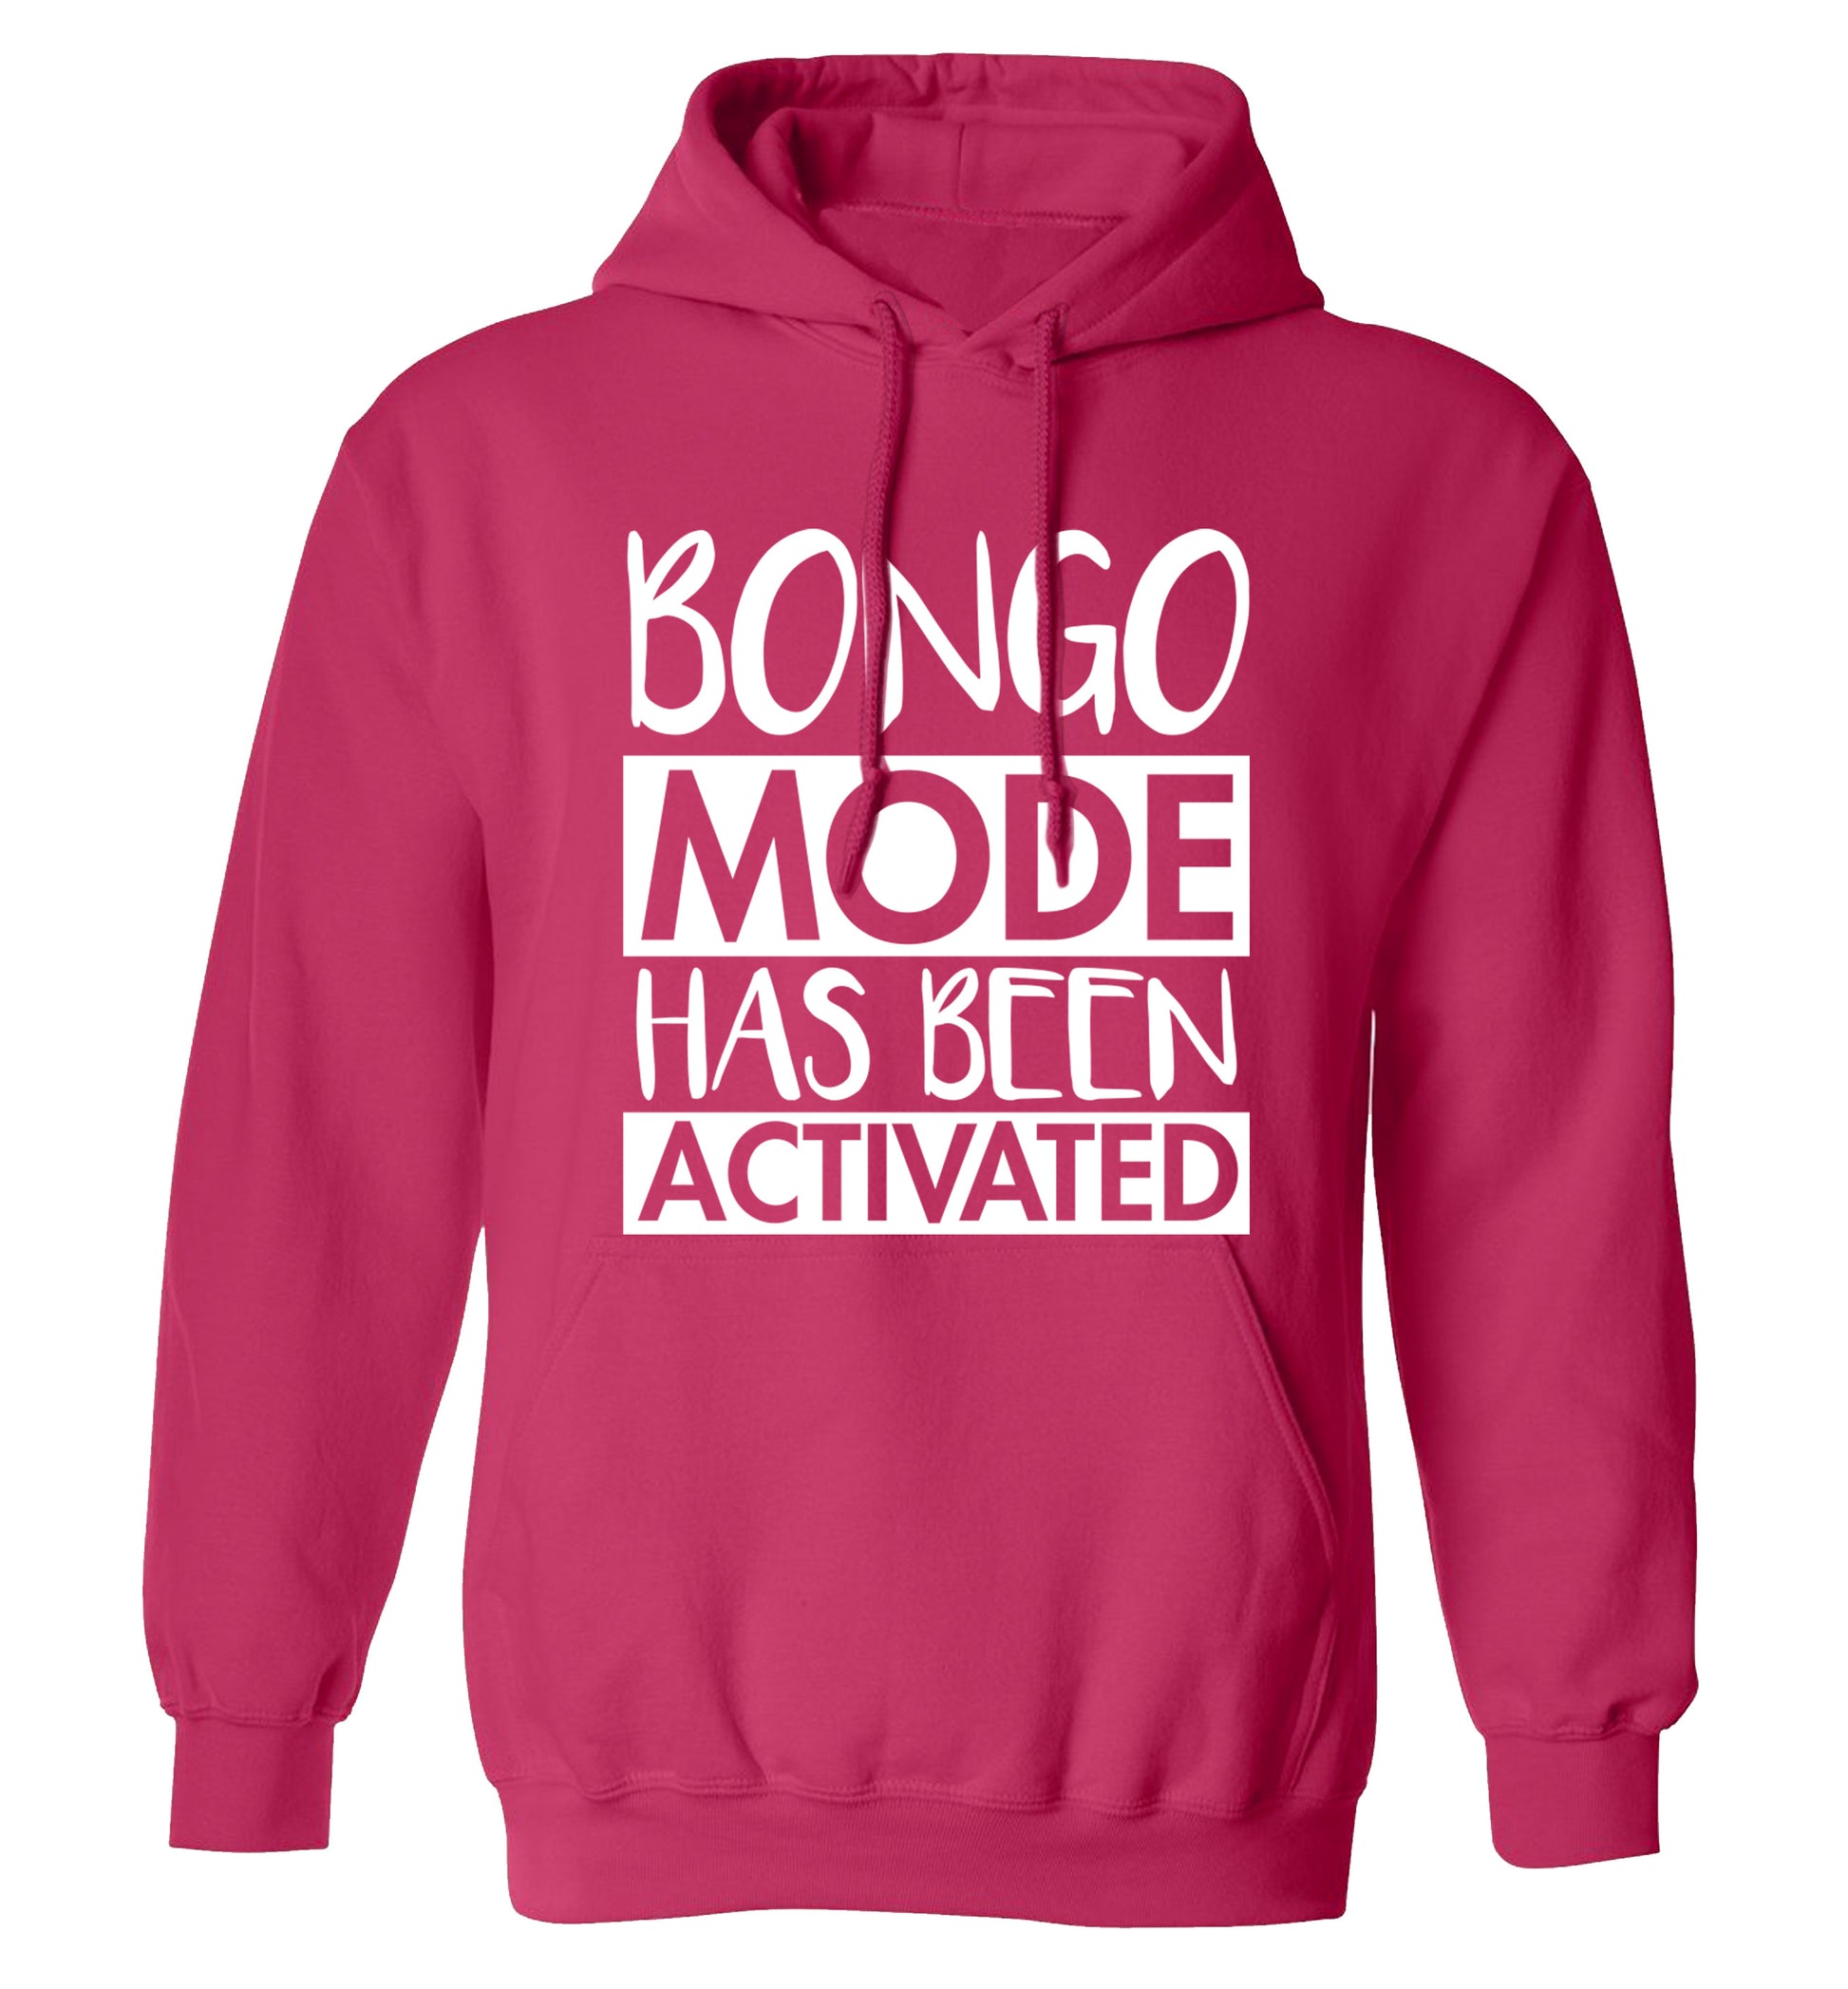 Bongo mode has been activated adults unisexpink hoodie 2XL